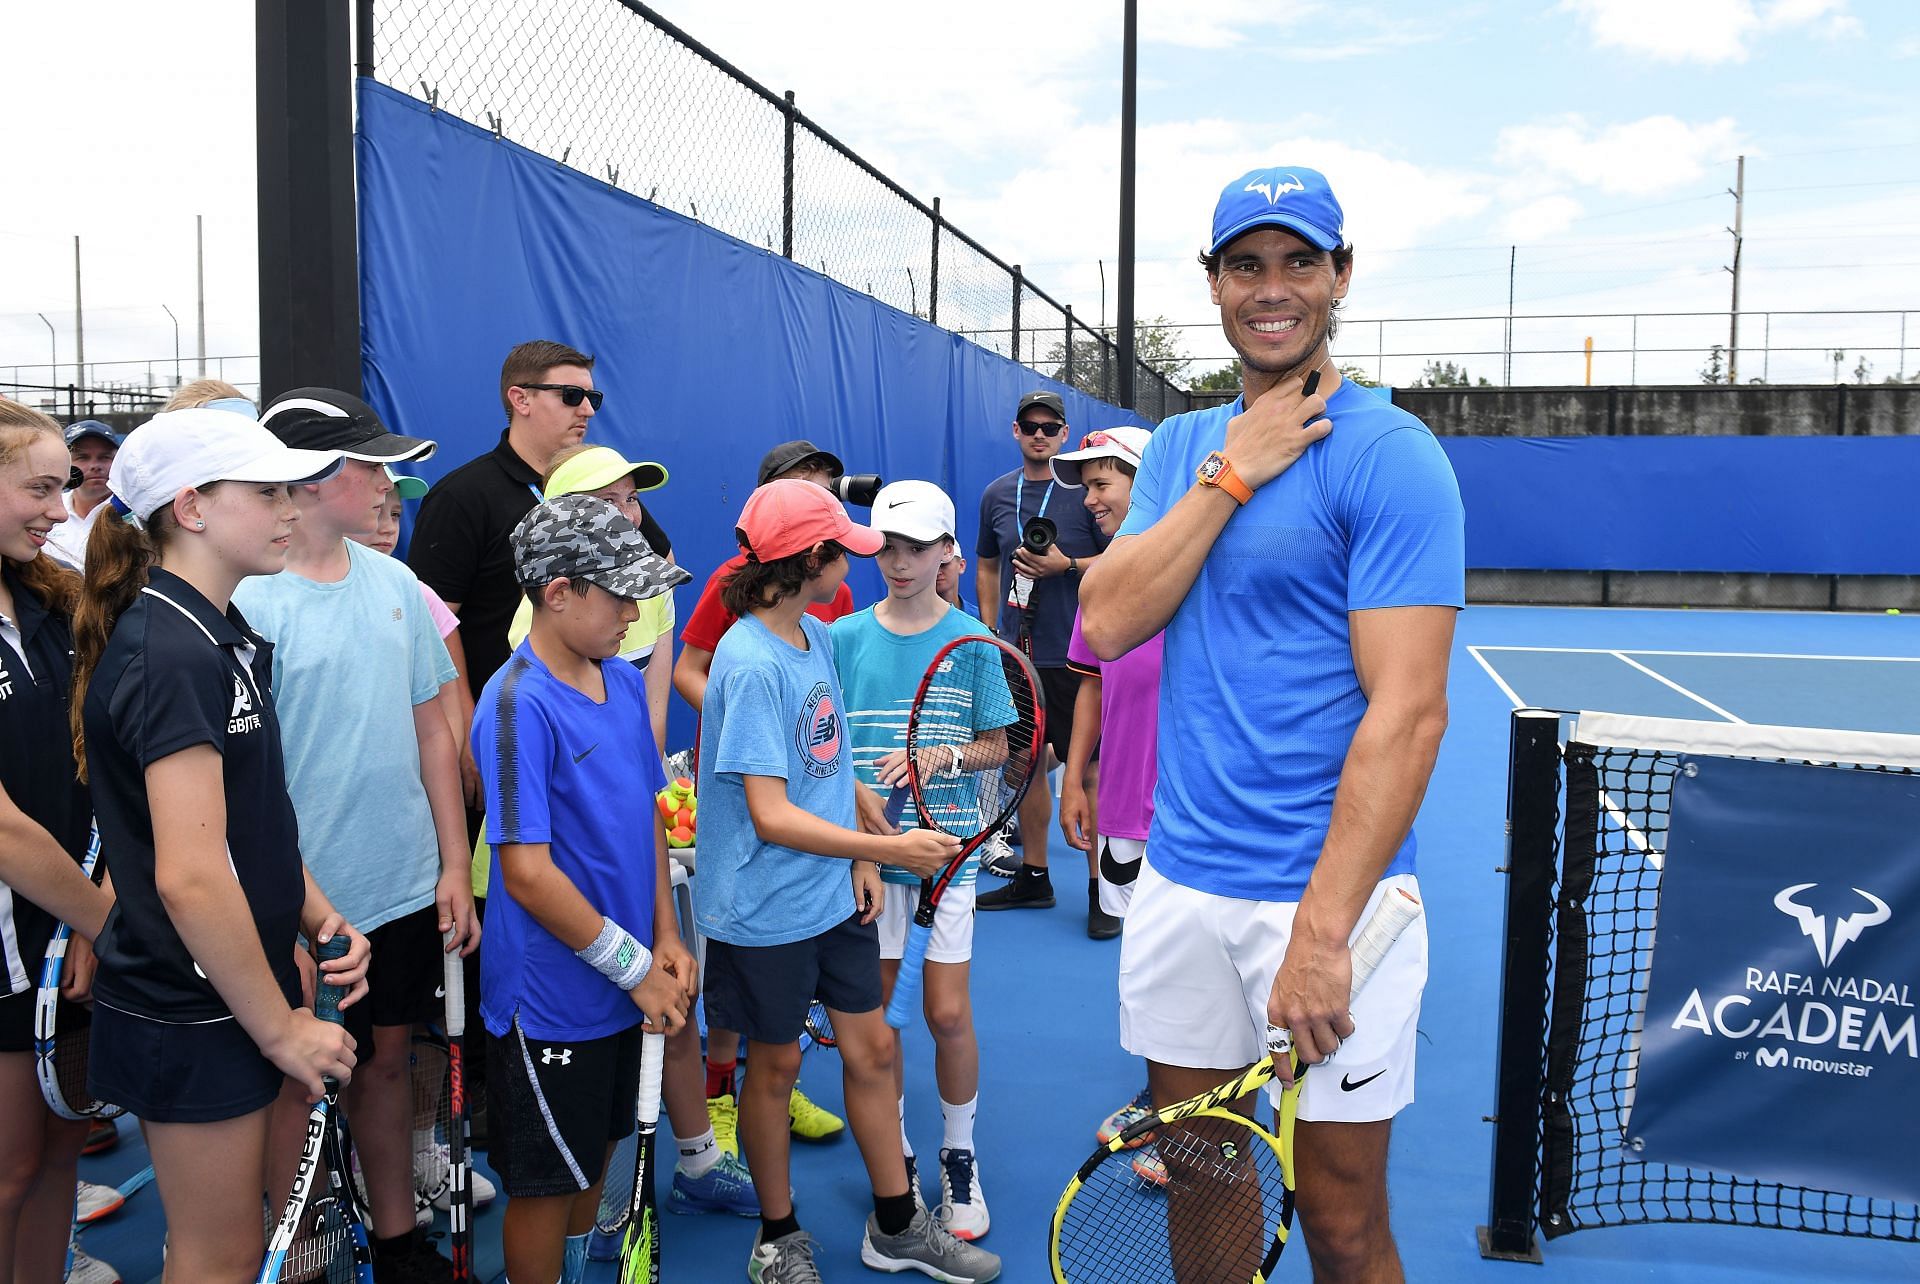 Kids enjoying a training session with Rafael Nadal